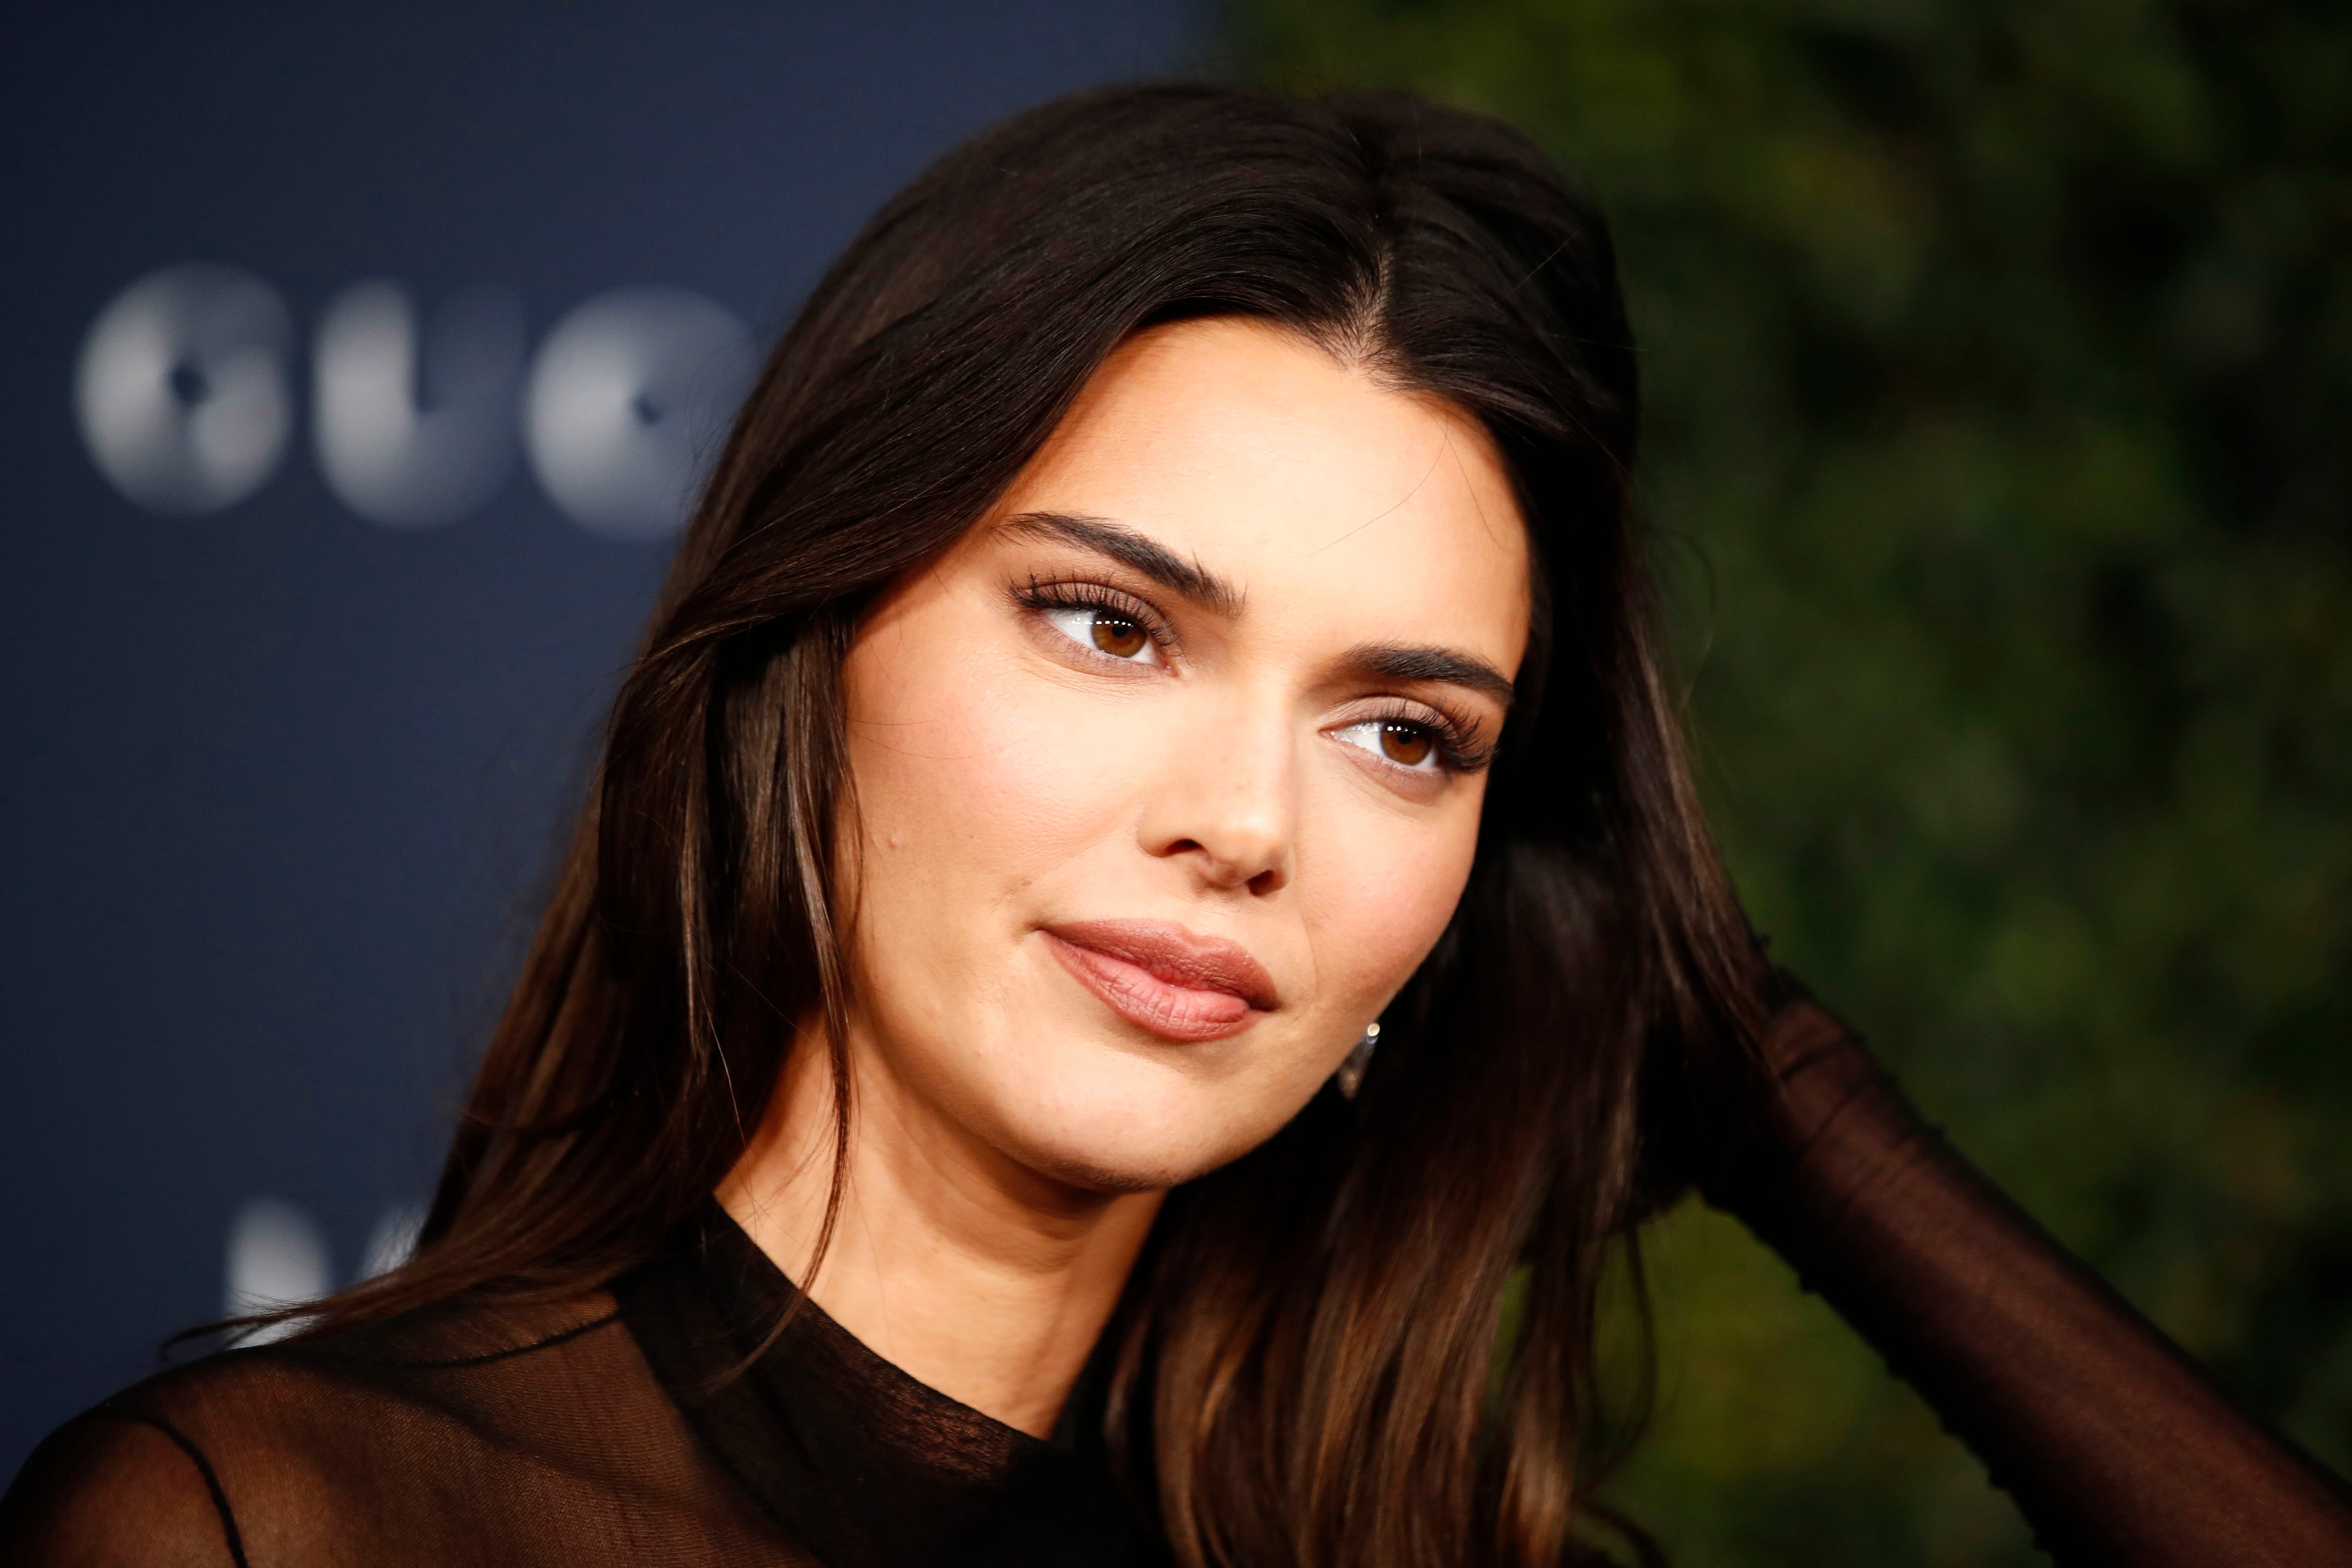 Revelan cuán afectada está Kendall Jenner tras sus últimos fracasos